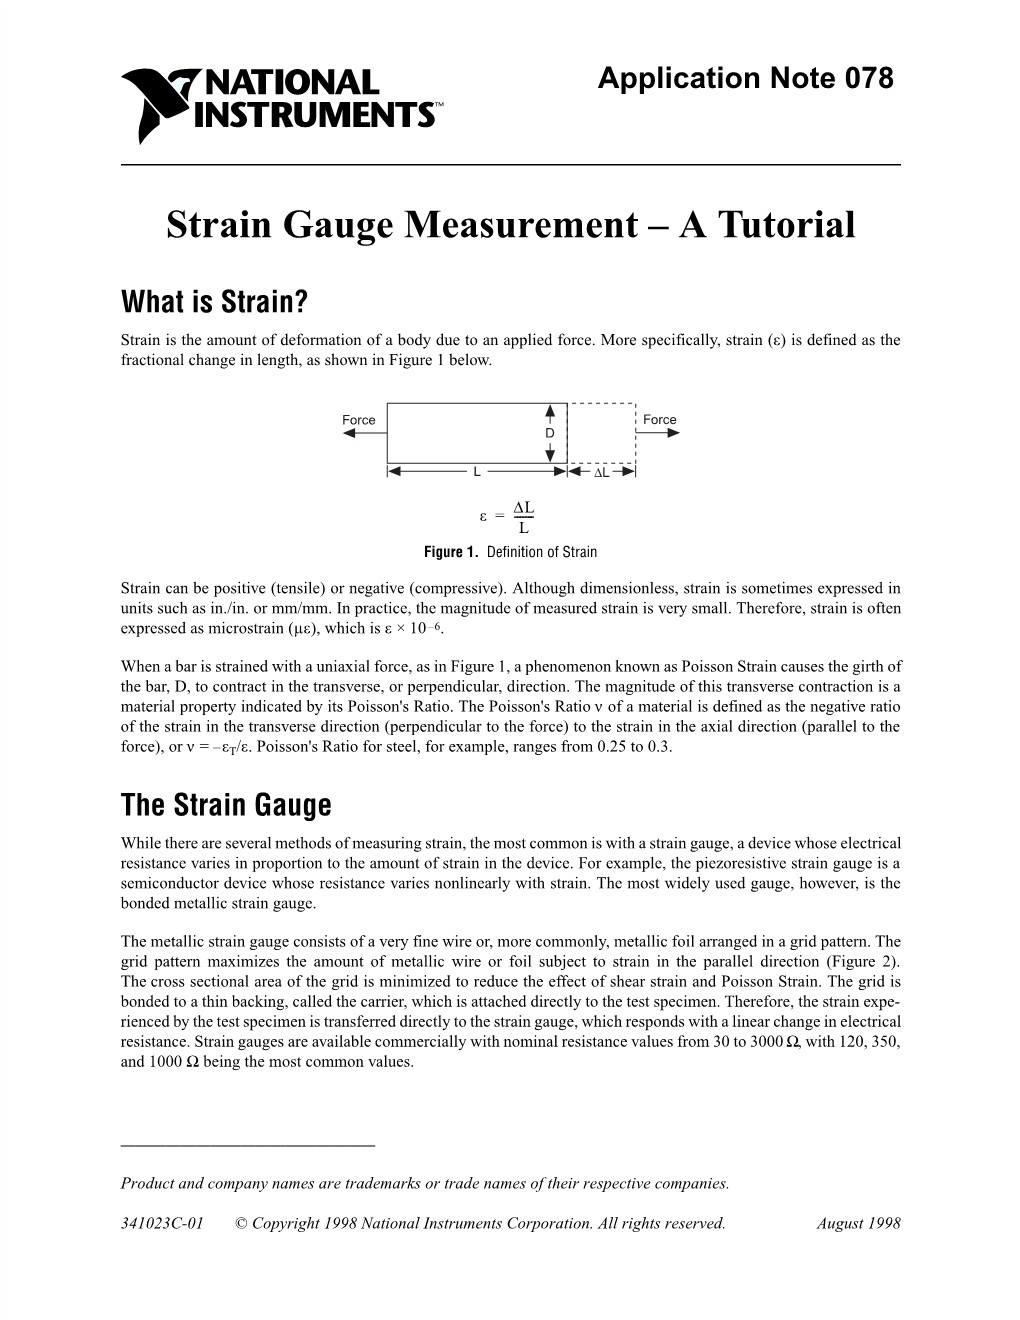 Strain Gauge Measurement – a Tutorial